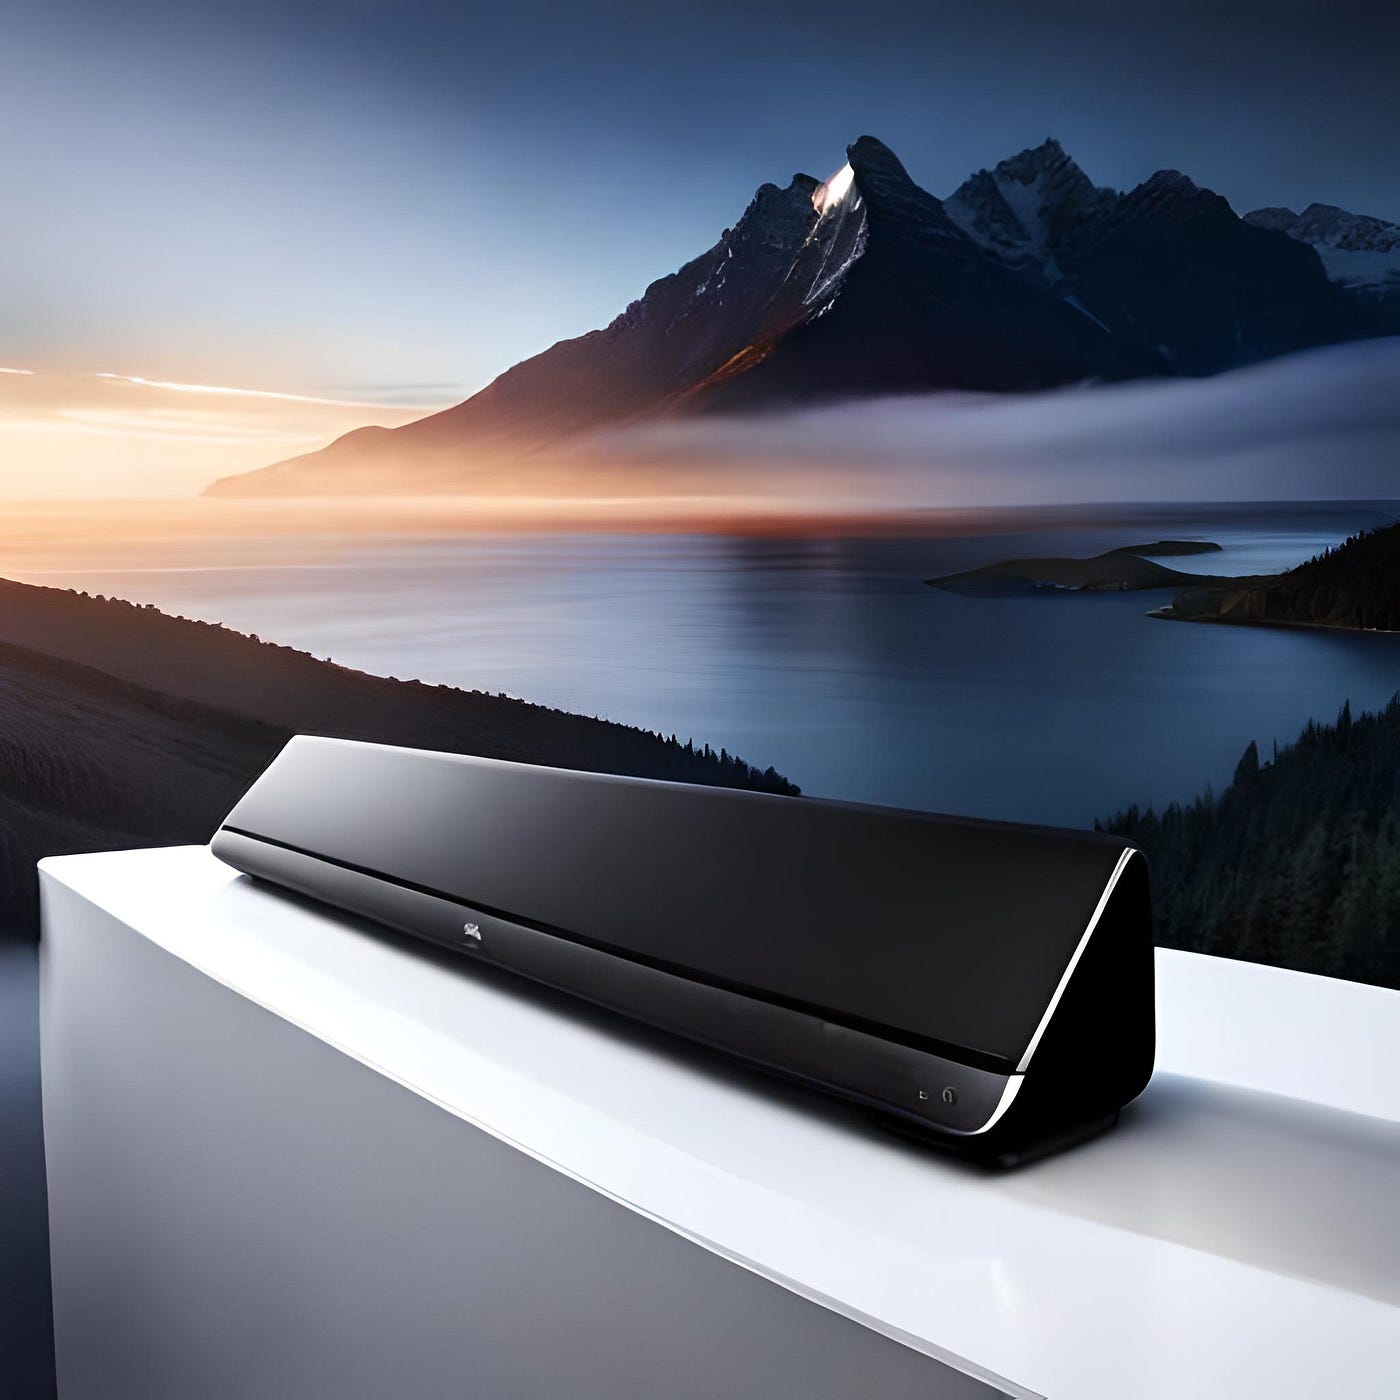 Does the LG Soundbar Work With Samsung televisions?, by Vijay Pal